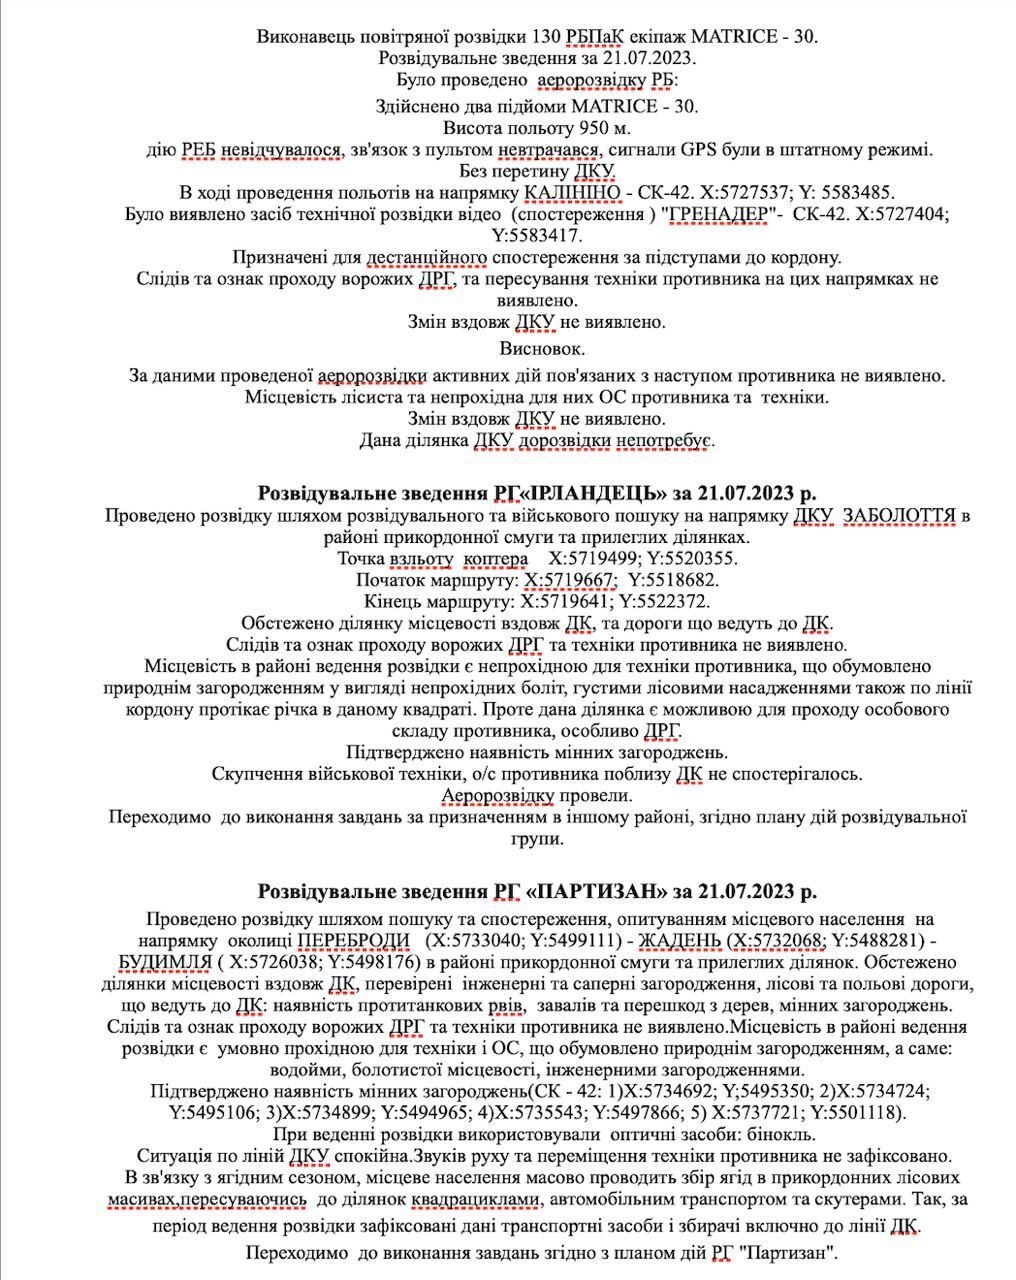 Ukraine Document